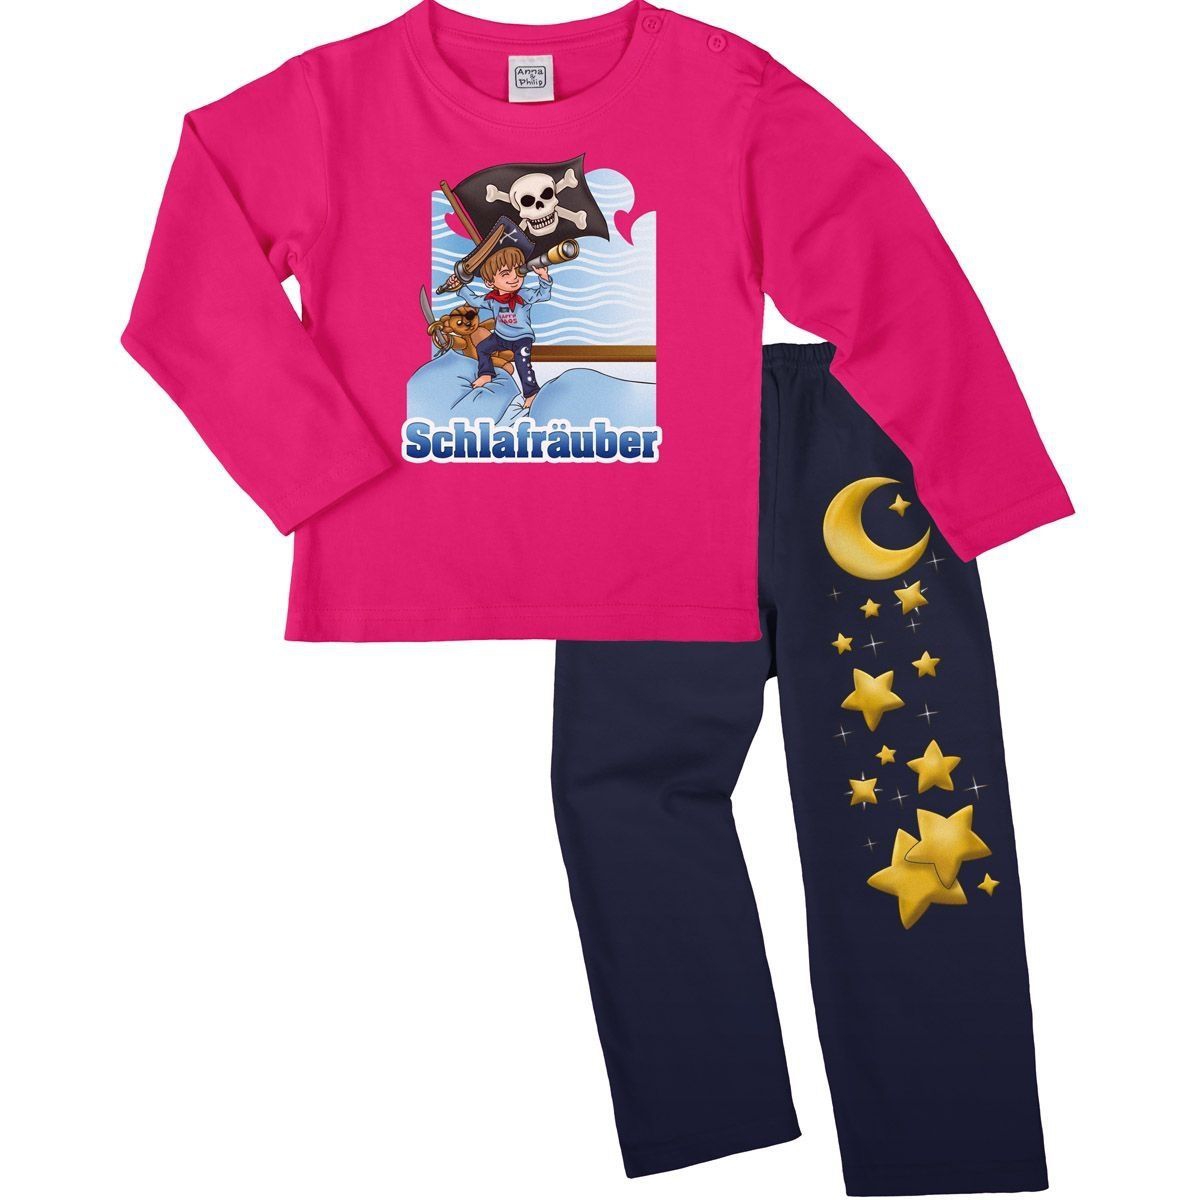 Schlafräuber Pyjama Set pink / navy 110 / 116